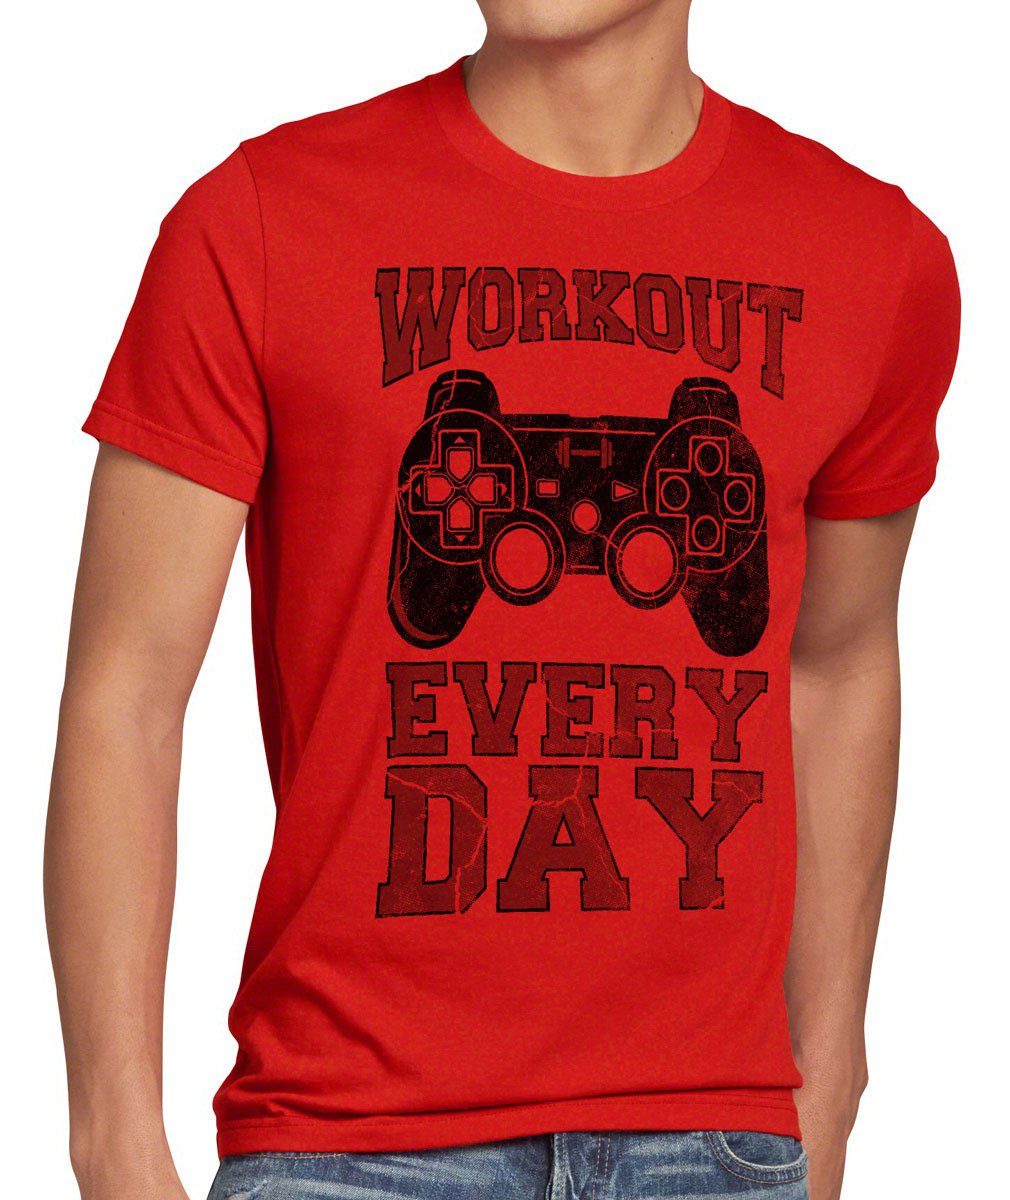 style3 Print-Shirt Herren T-Shirt Workout Gamer play sport station kontroller konsole gym game fun rot